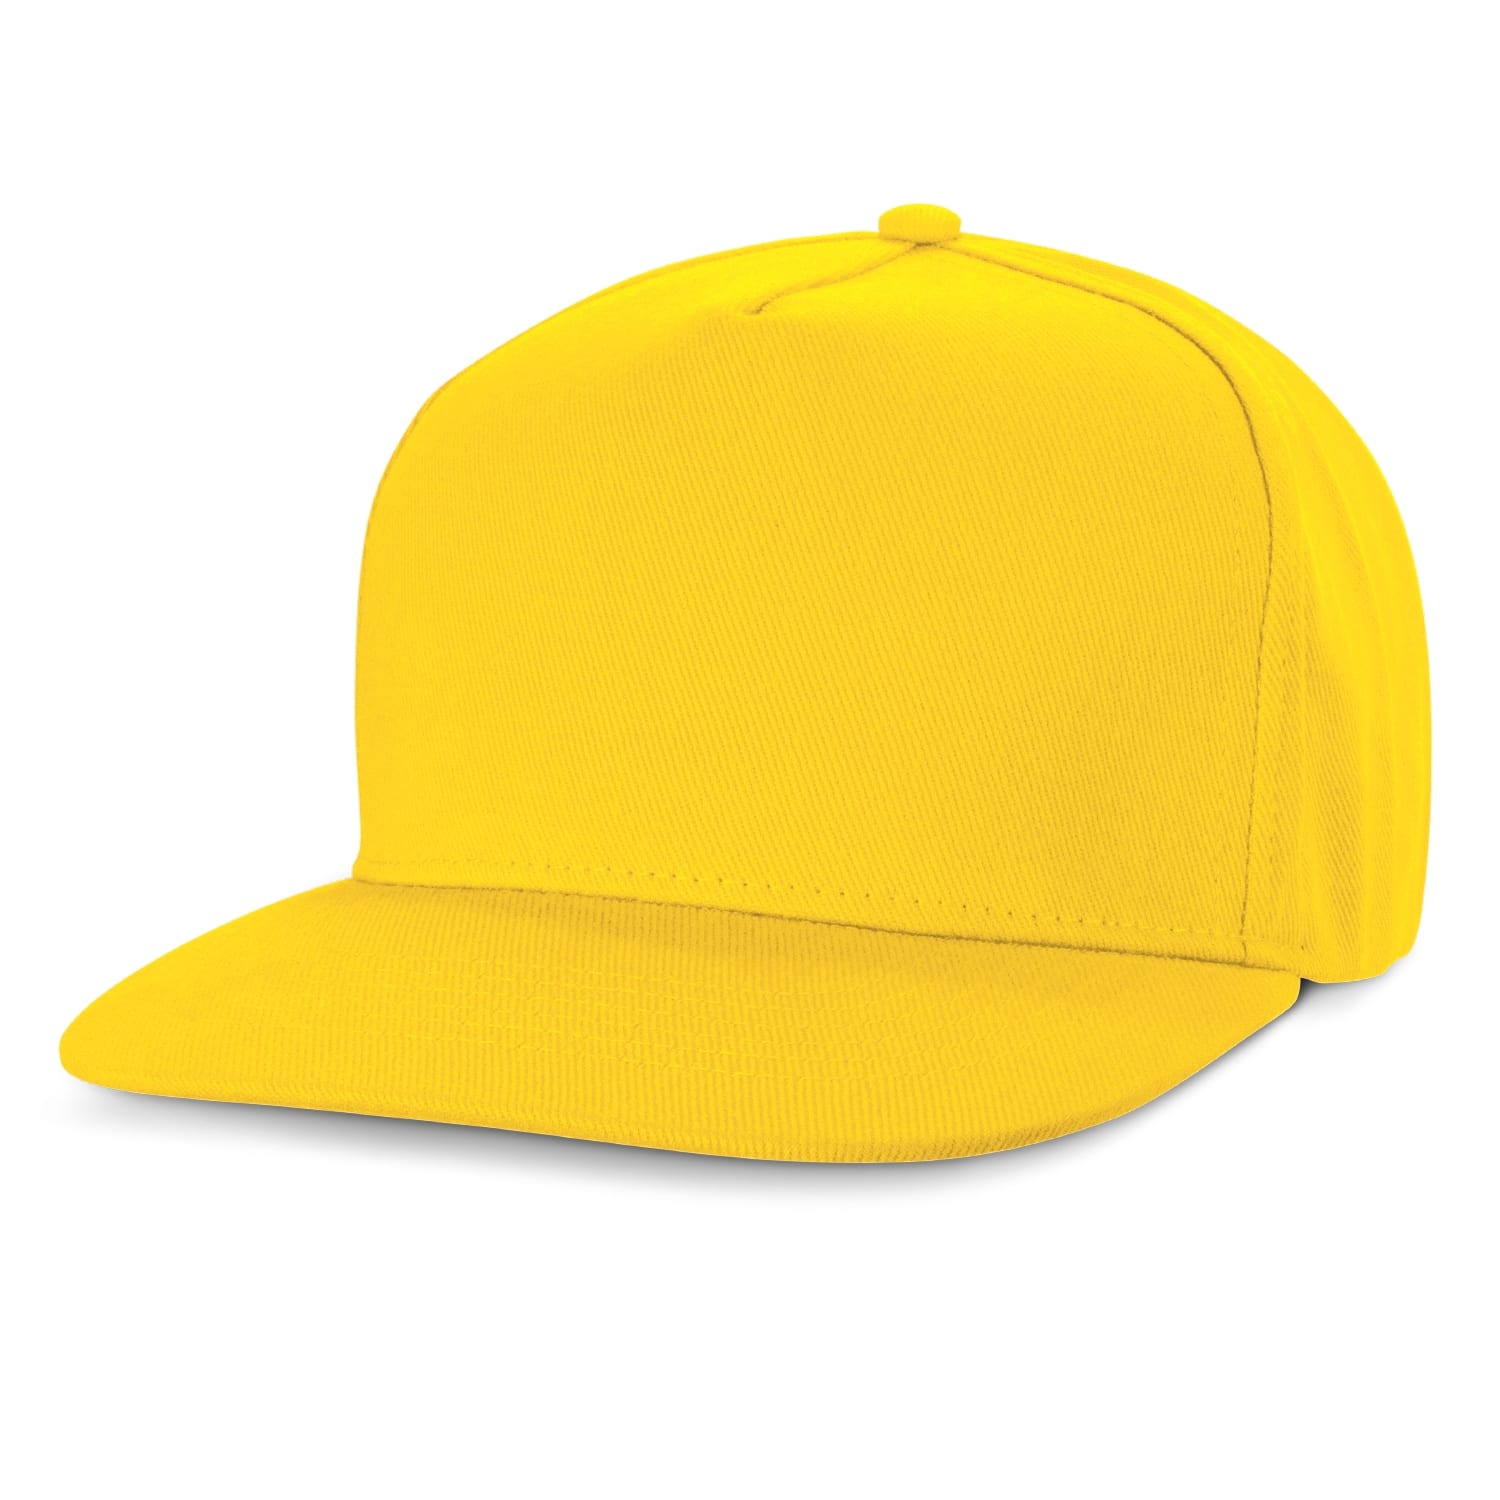 Summer Chrysler Flat Peak Cap cap